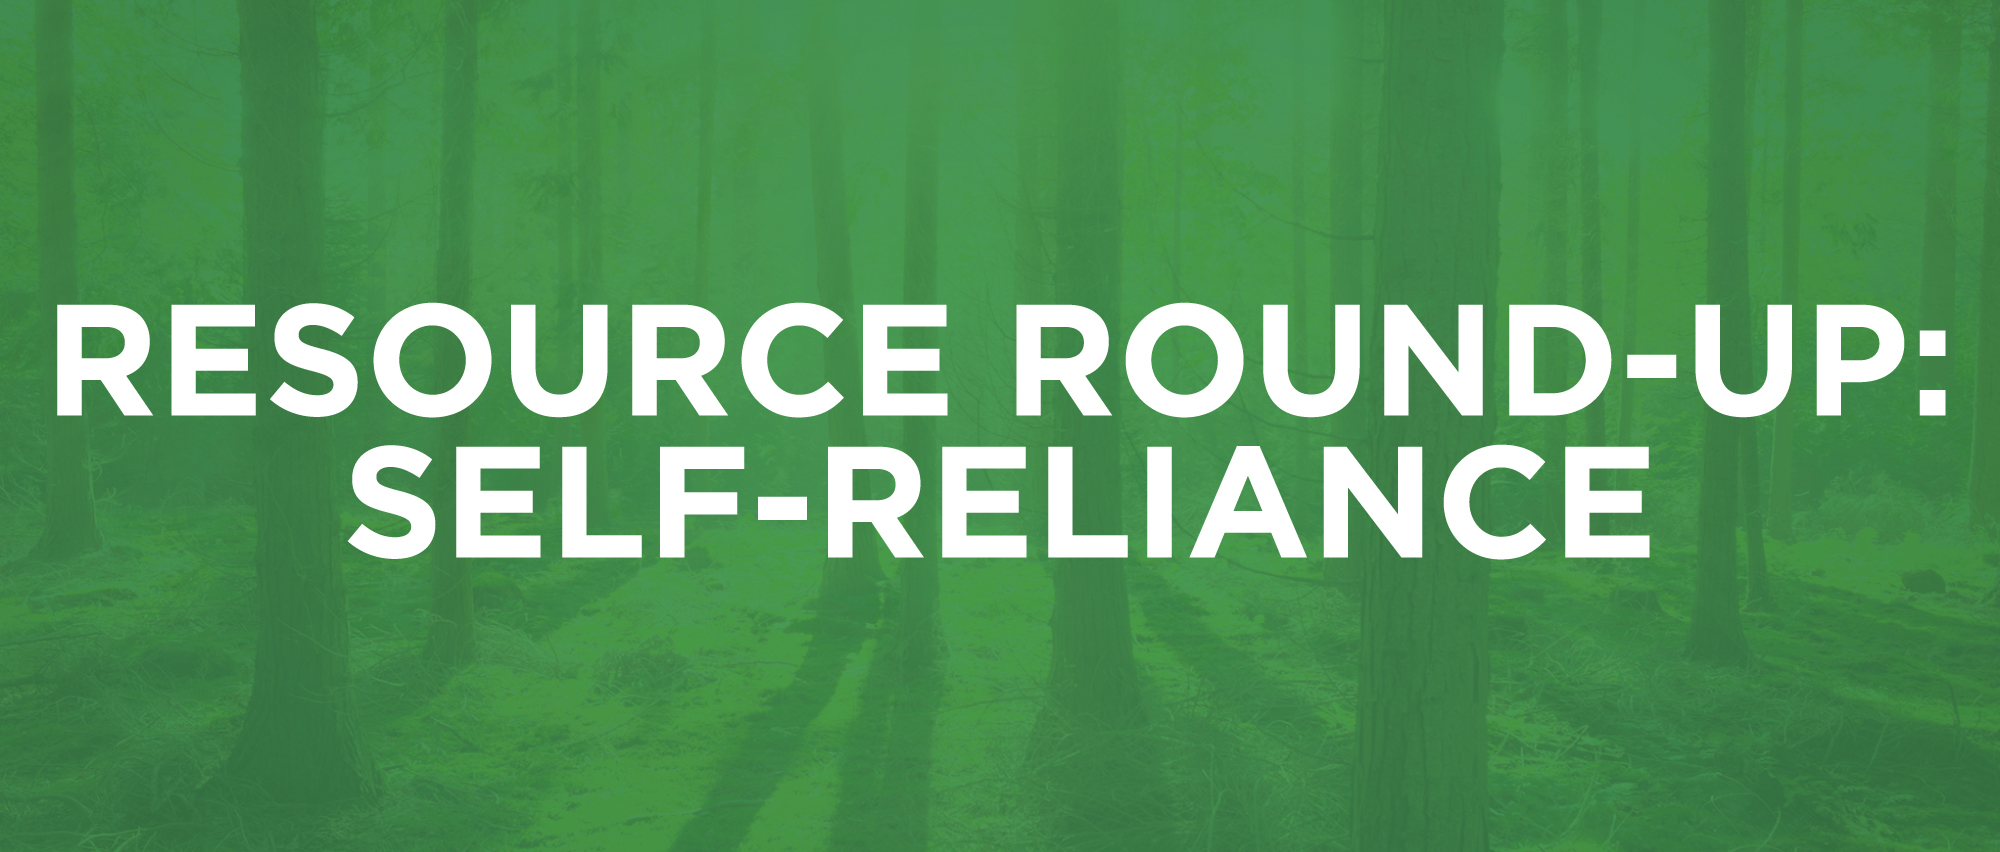 ResourceRoundup-3-SelfReliance.jpg